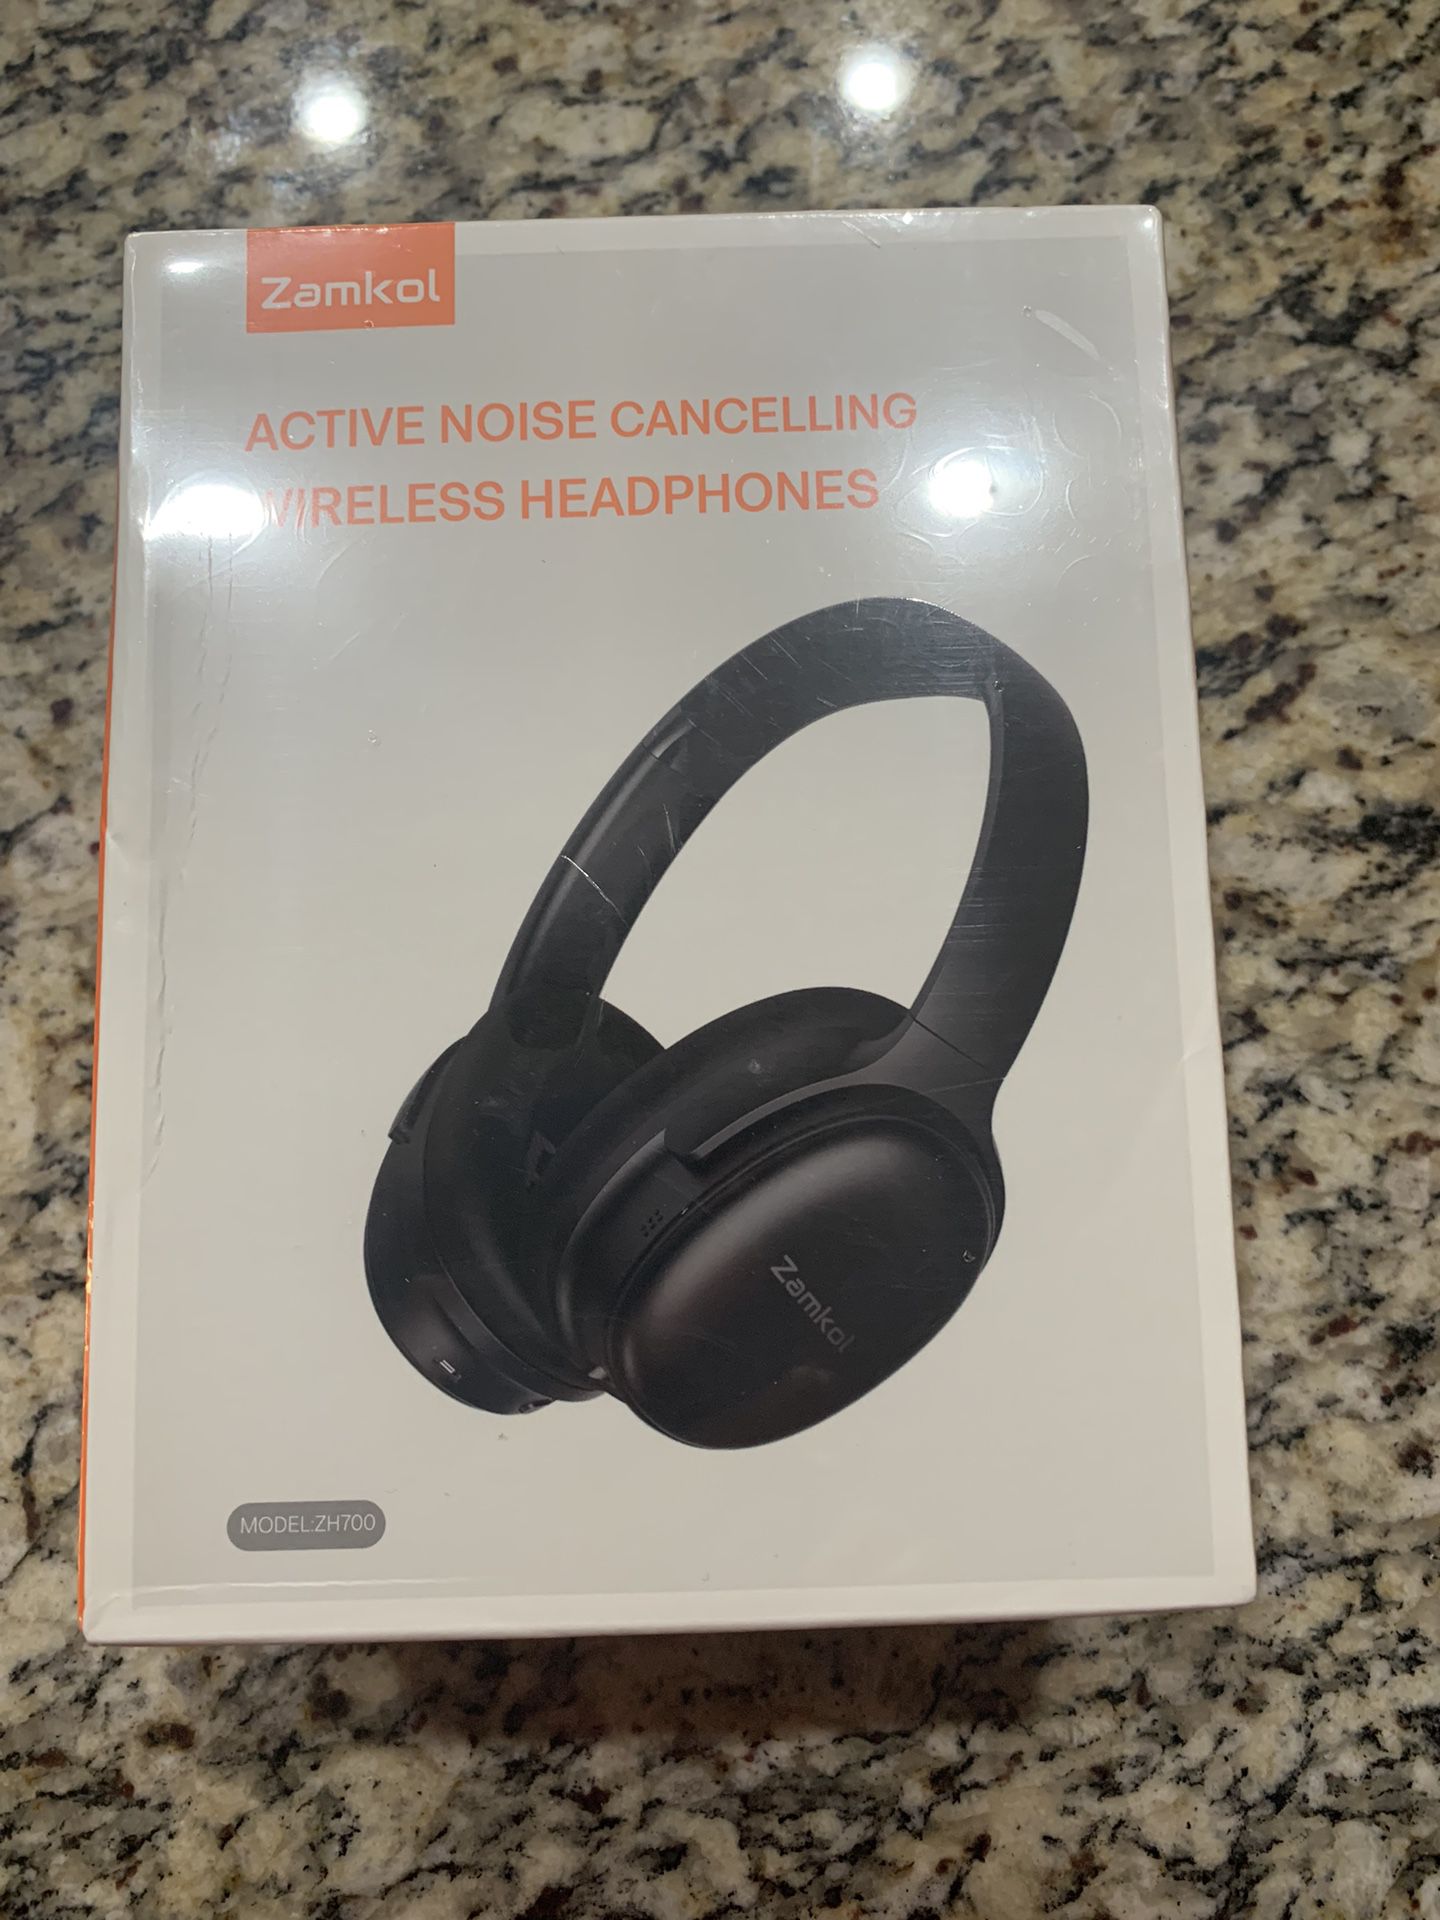 Noise, canceling wireless headphones